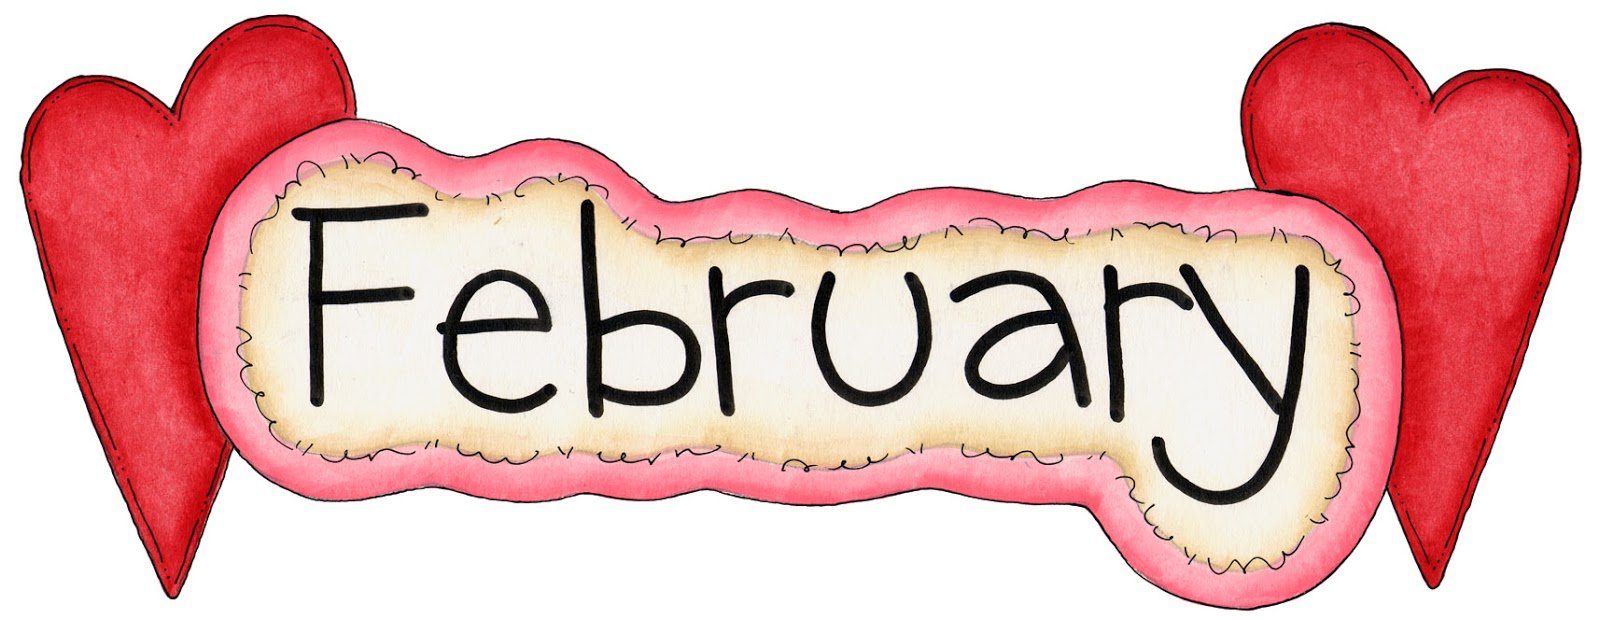 February month calendar clipart